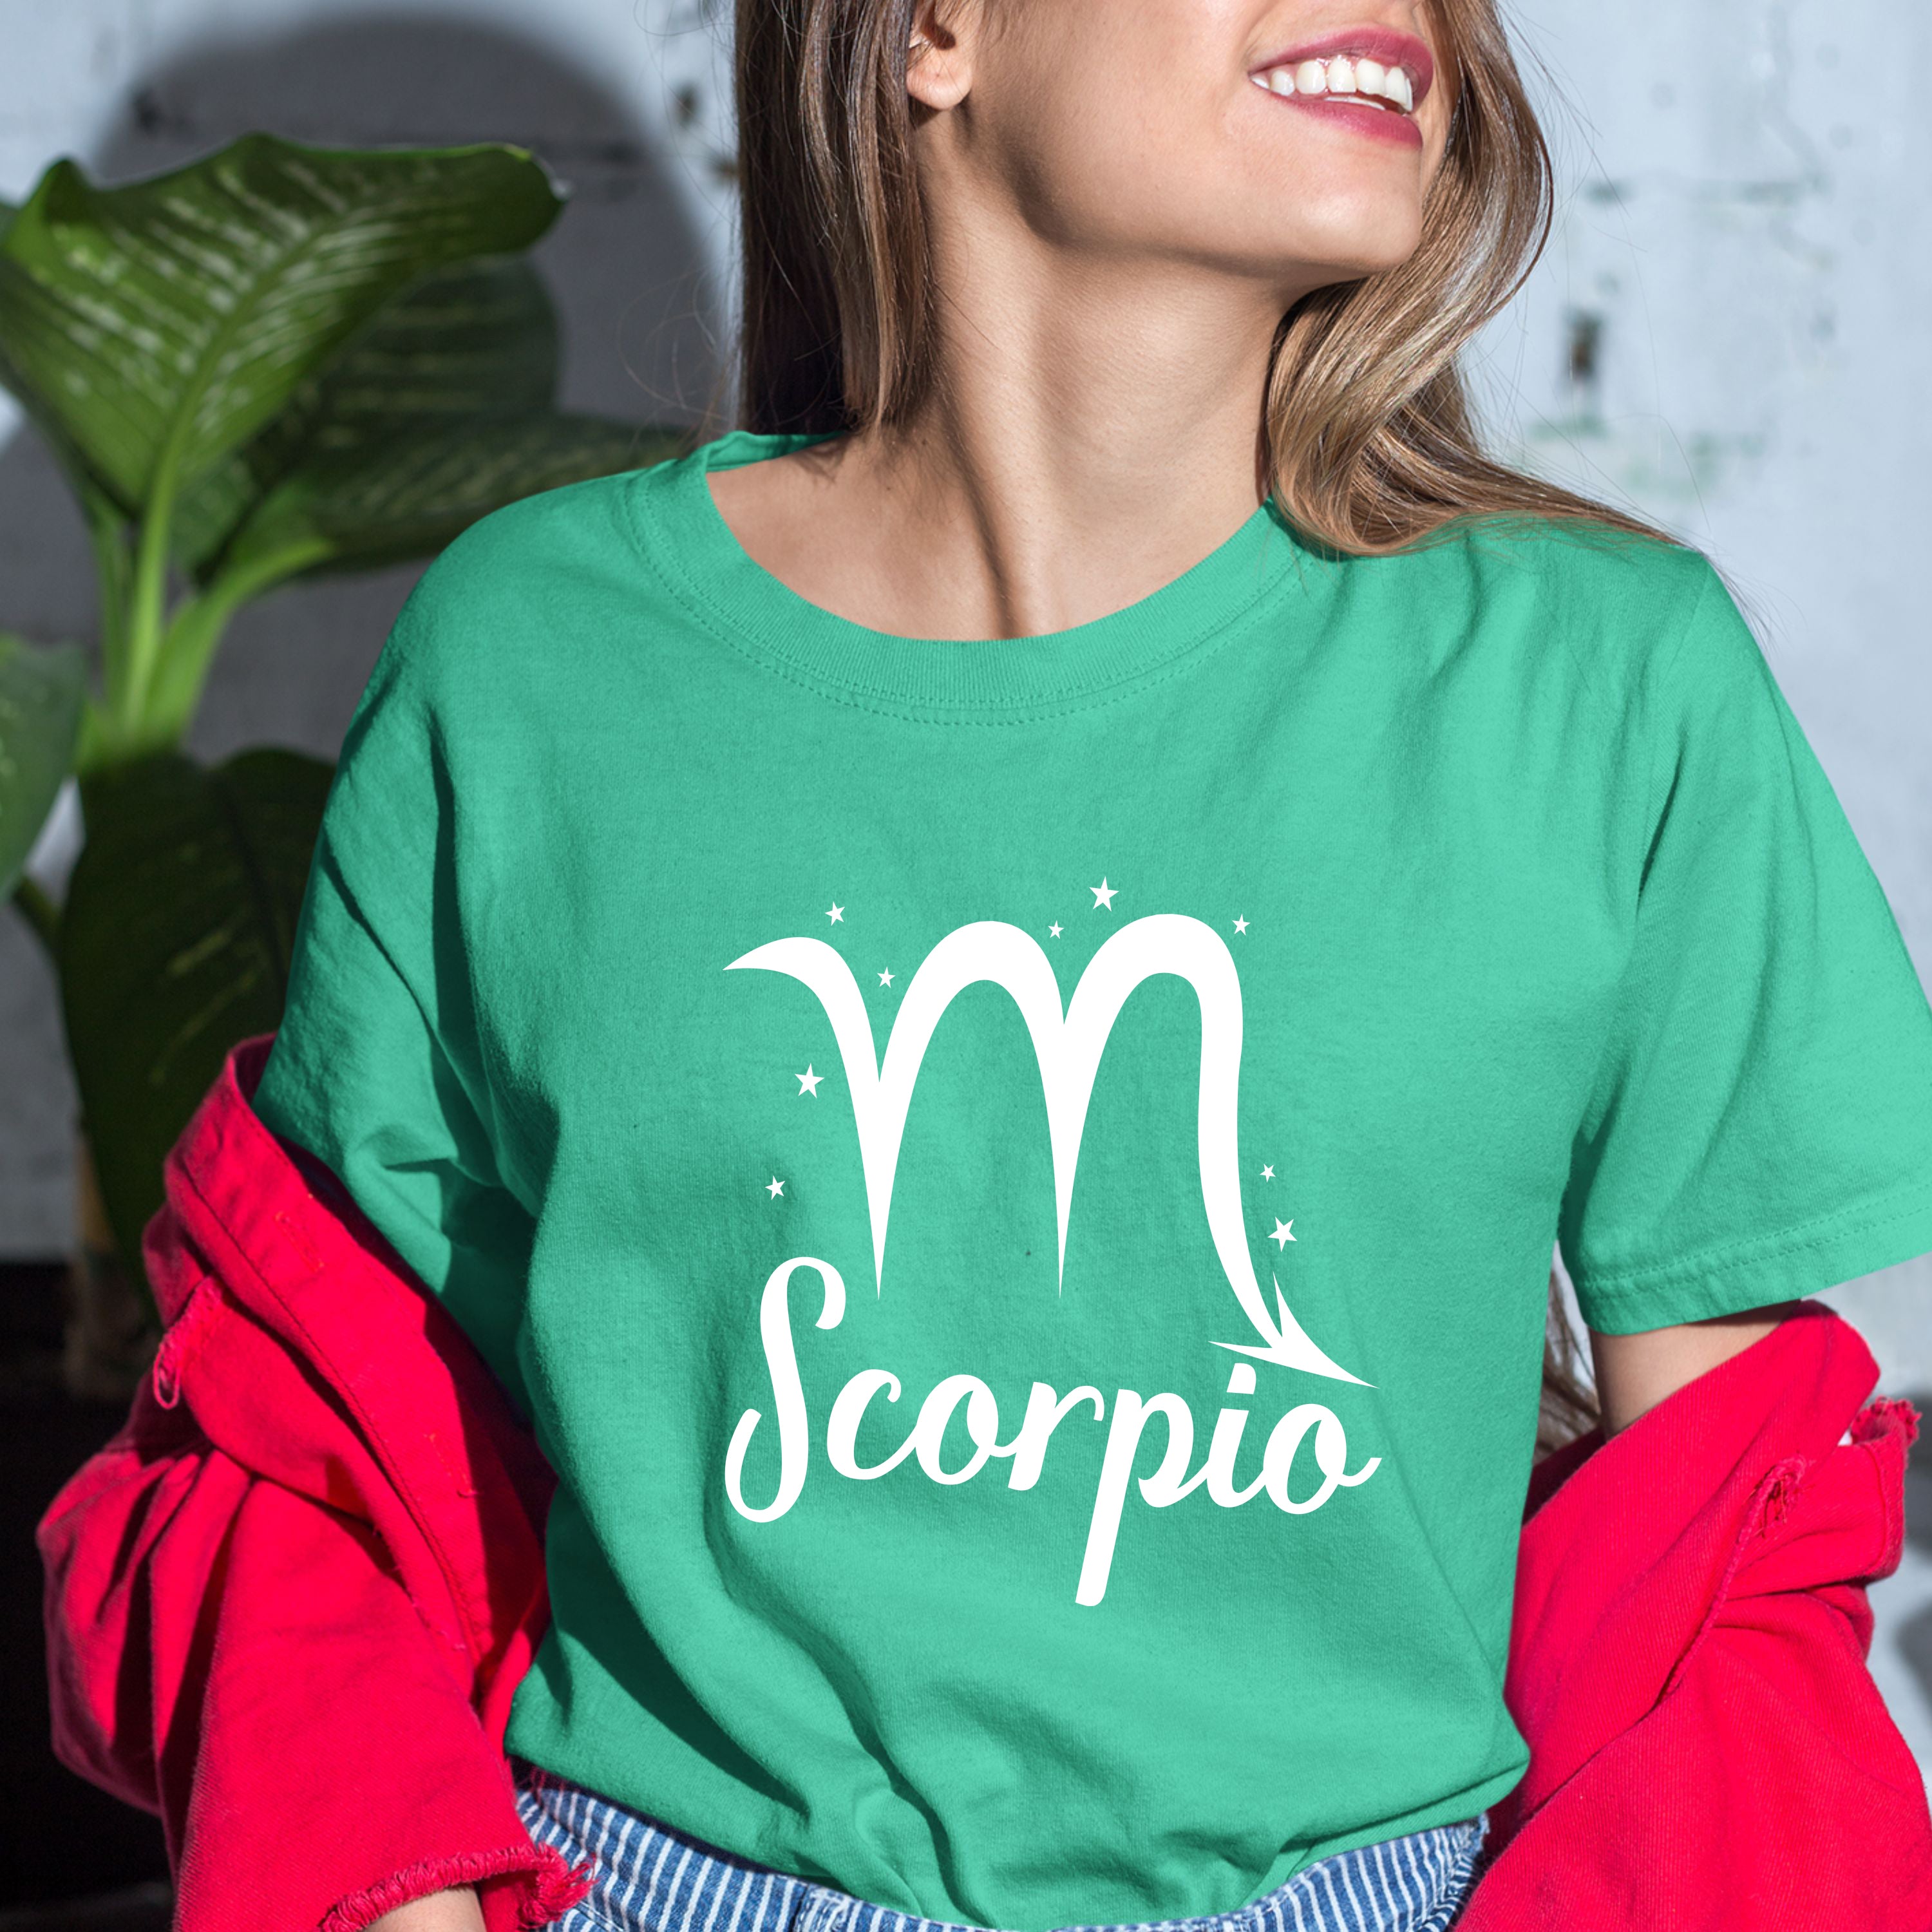 ''Scorpio" Astrological-Bella Canvas T-Shirt